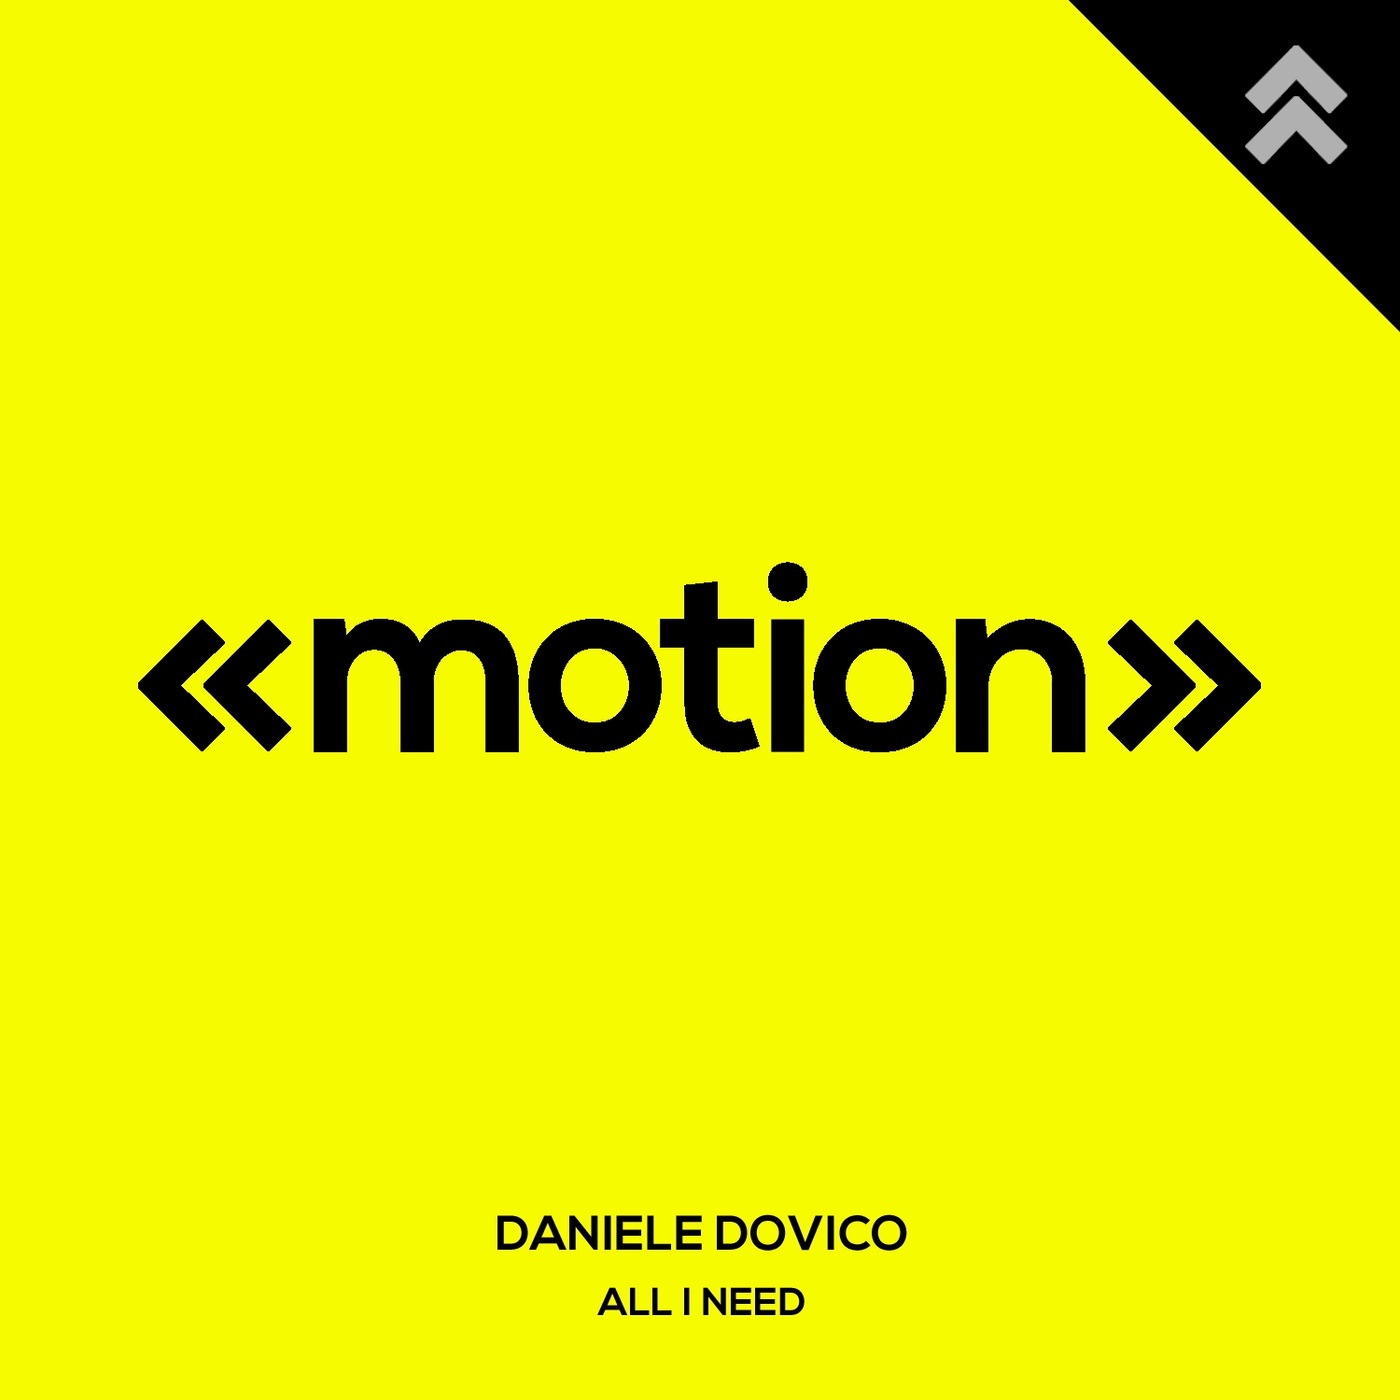 Daniele Dovico - All I Need / motion